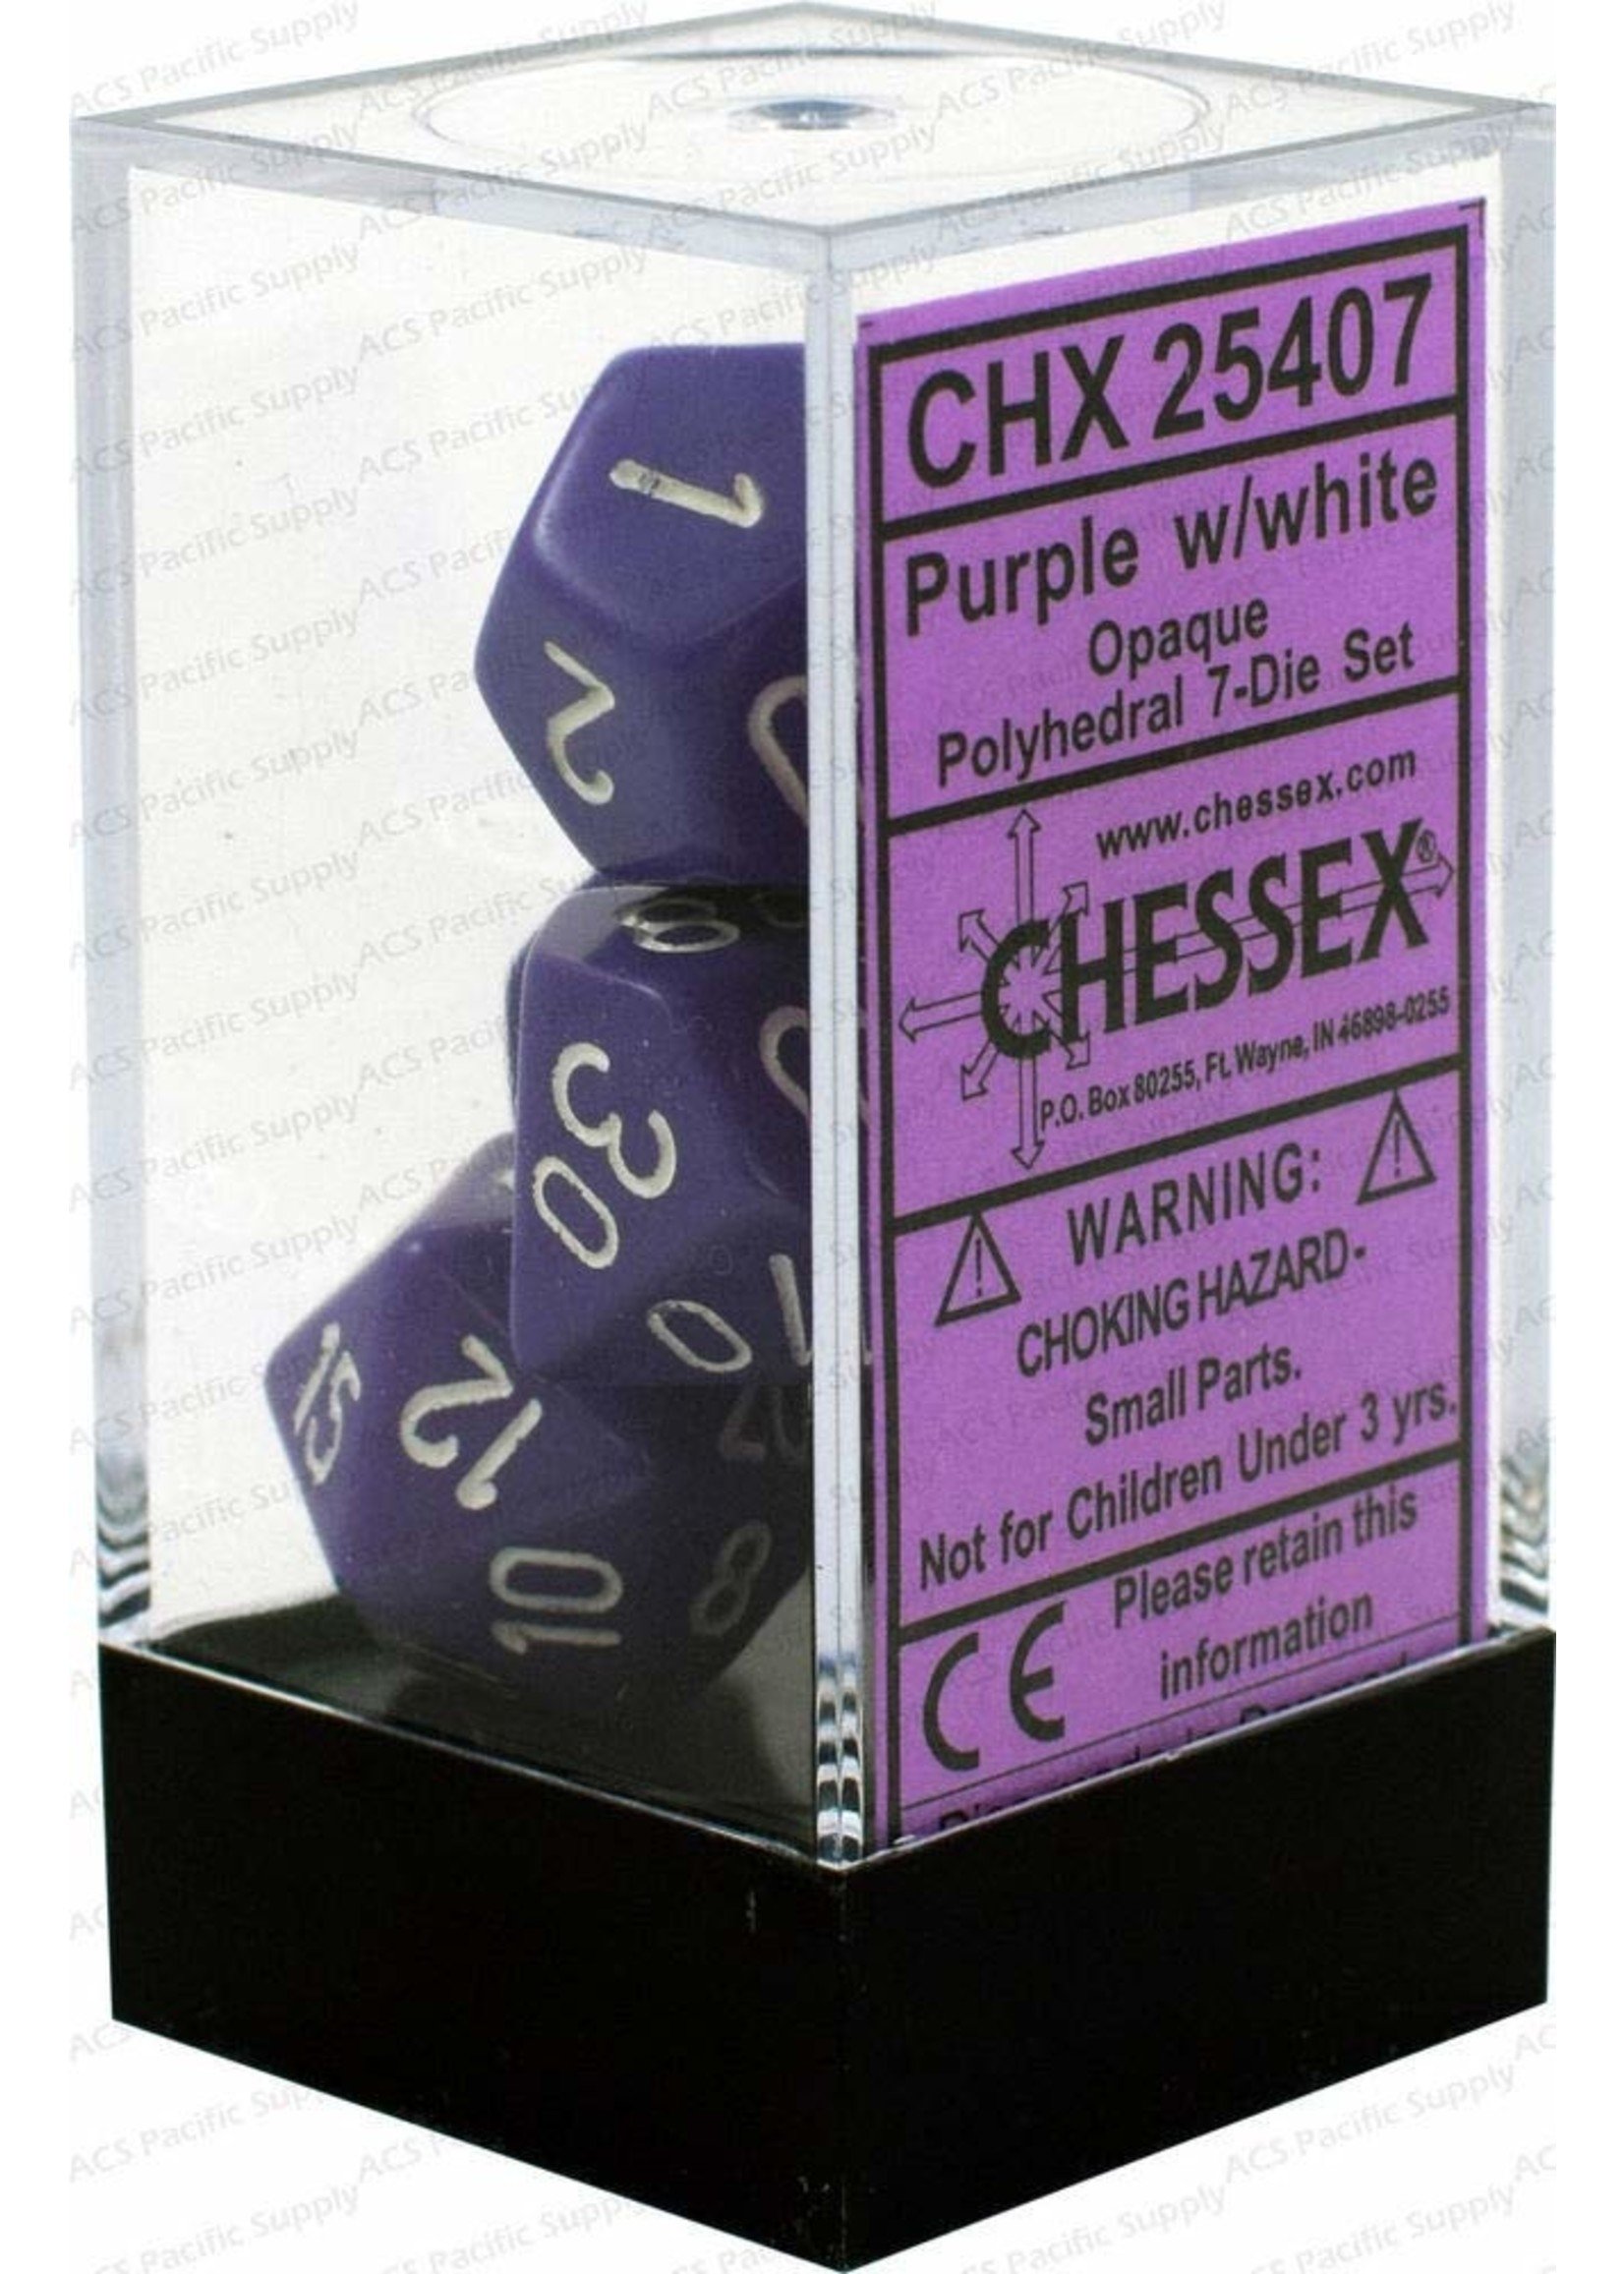 CHX 25407 Dice Purple/white